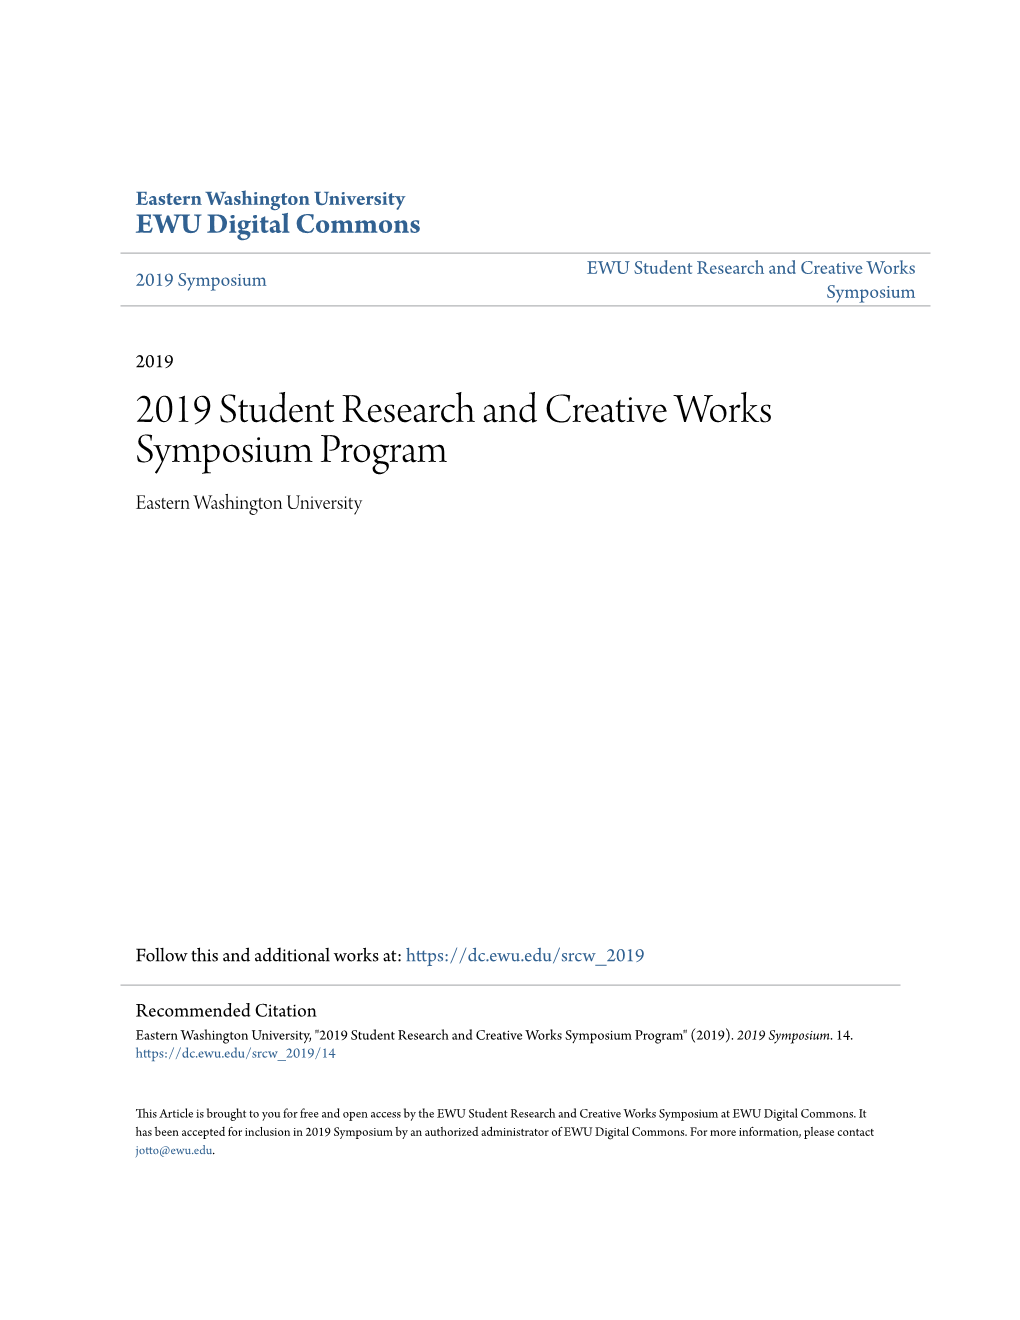 2019 Student Research and Creative Works Symposium Program Eastern Washington University